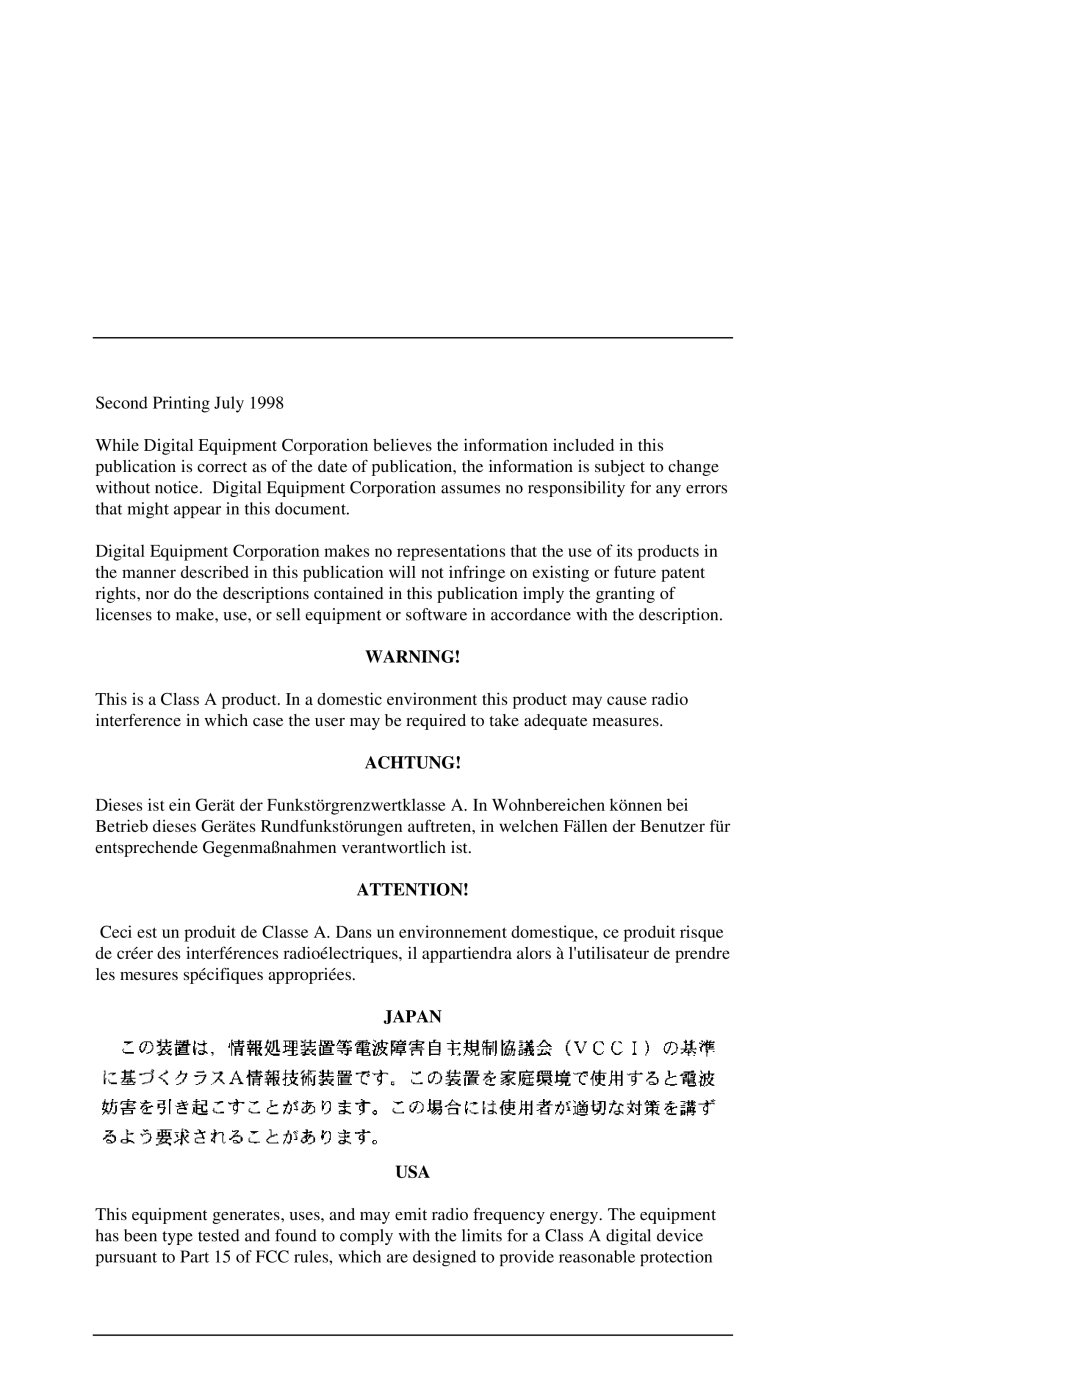 Intel EK-KZPCM-UG manual Achtung, Japan Usa 